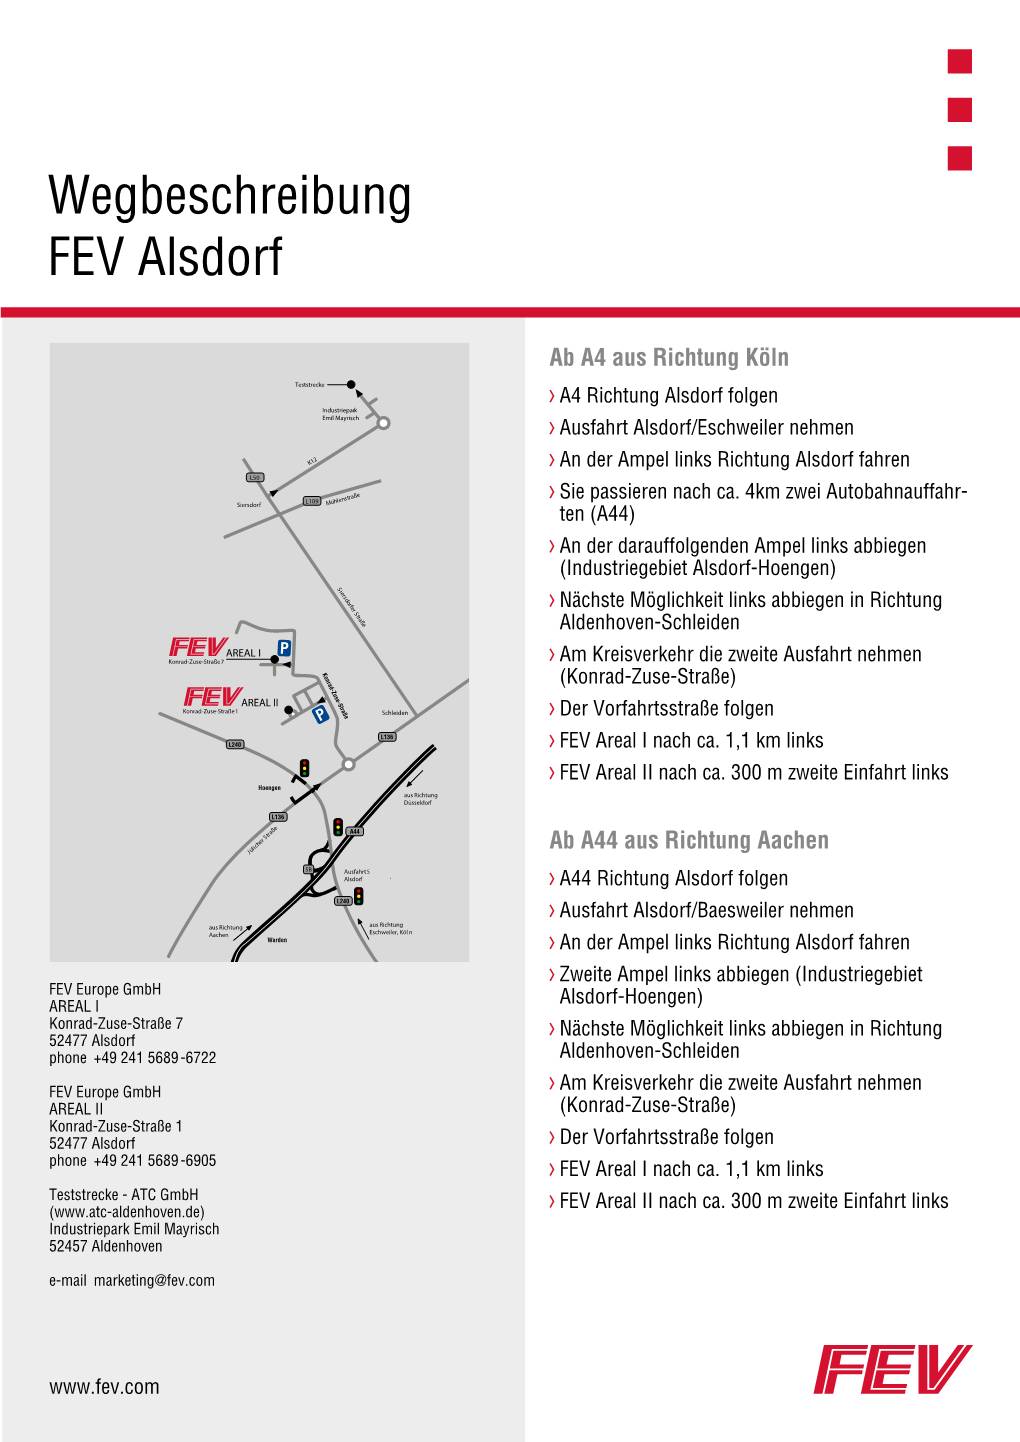 Wegbeschreibung FEV Alsdorf